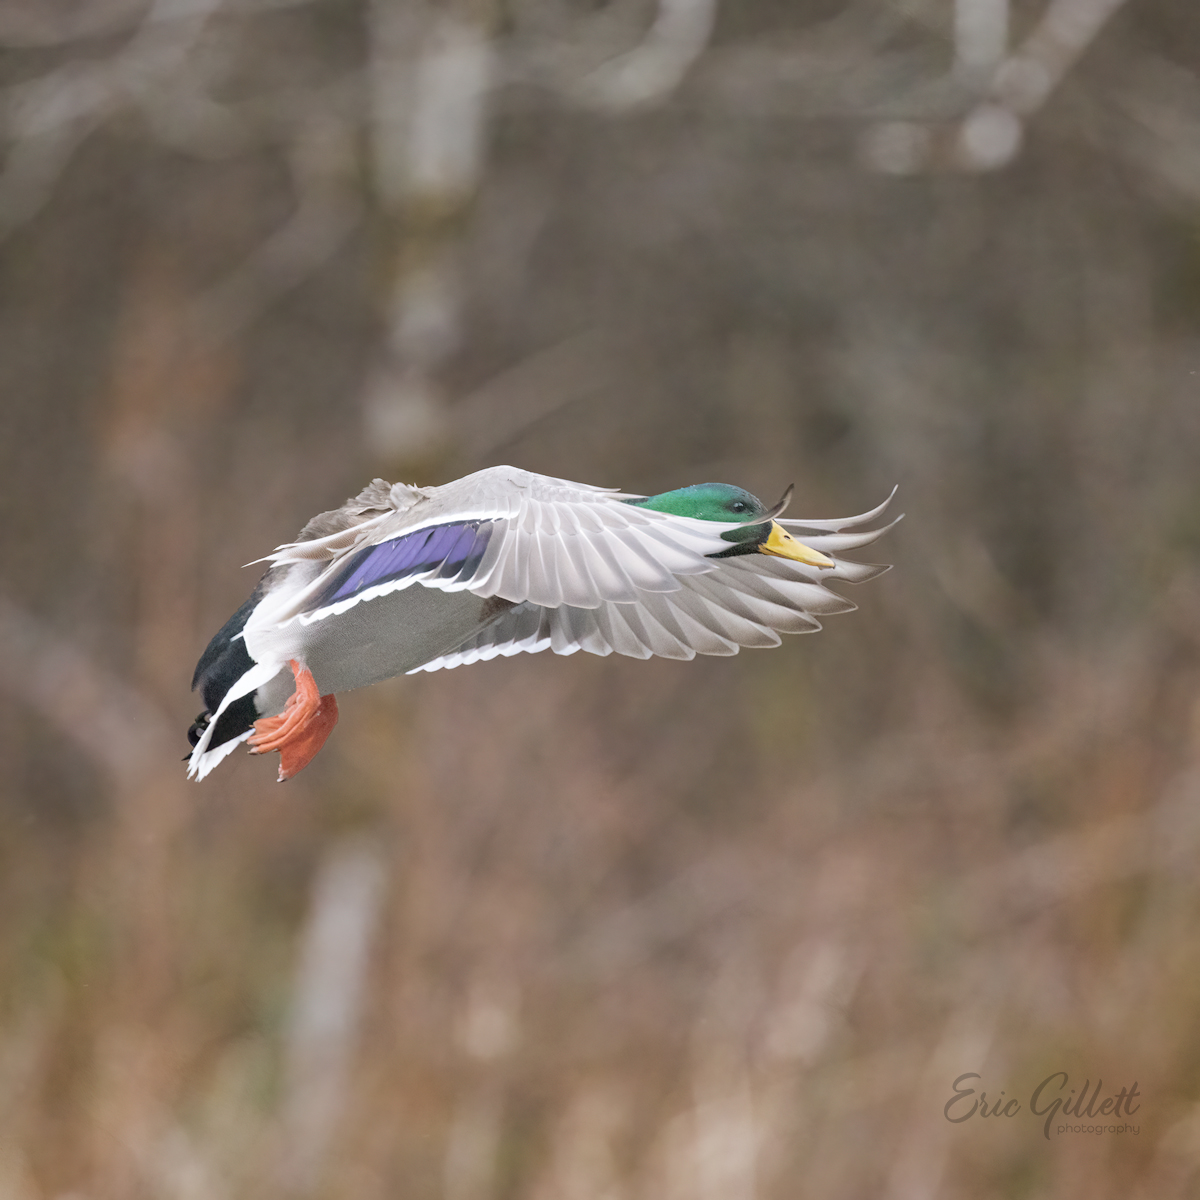 🦆 Mallard on final approach! 

#MallardMonday
#birdphotography